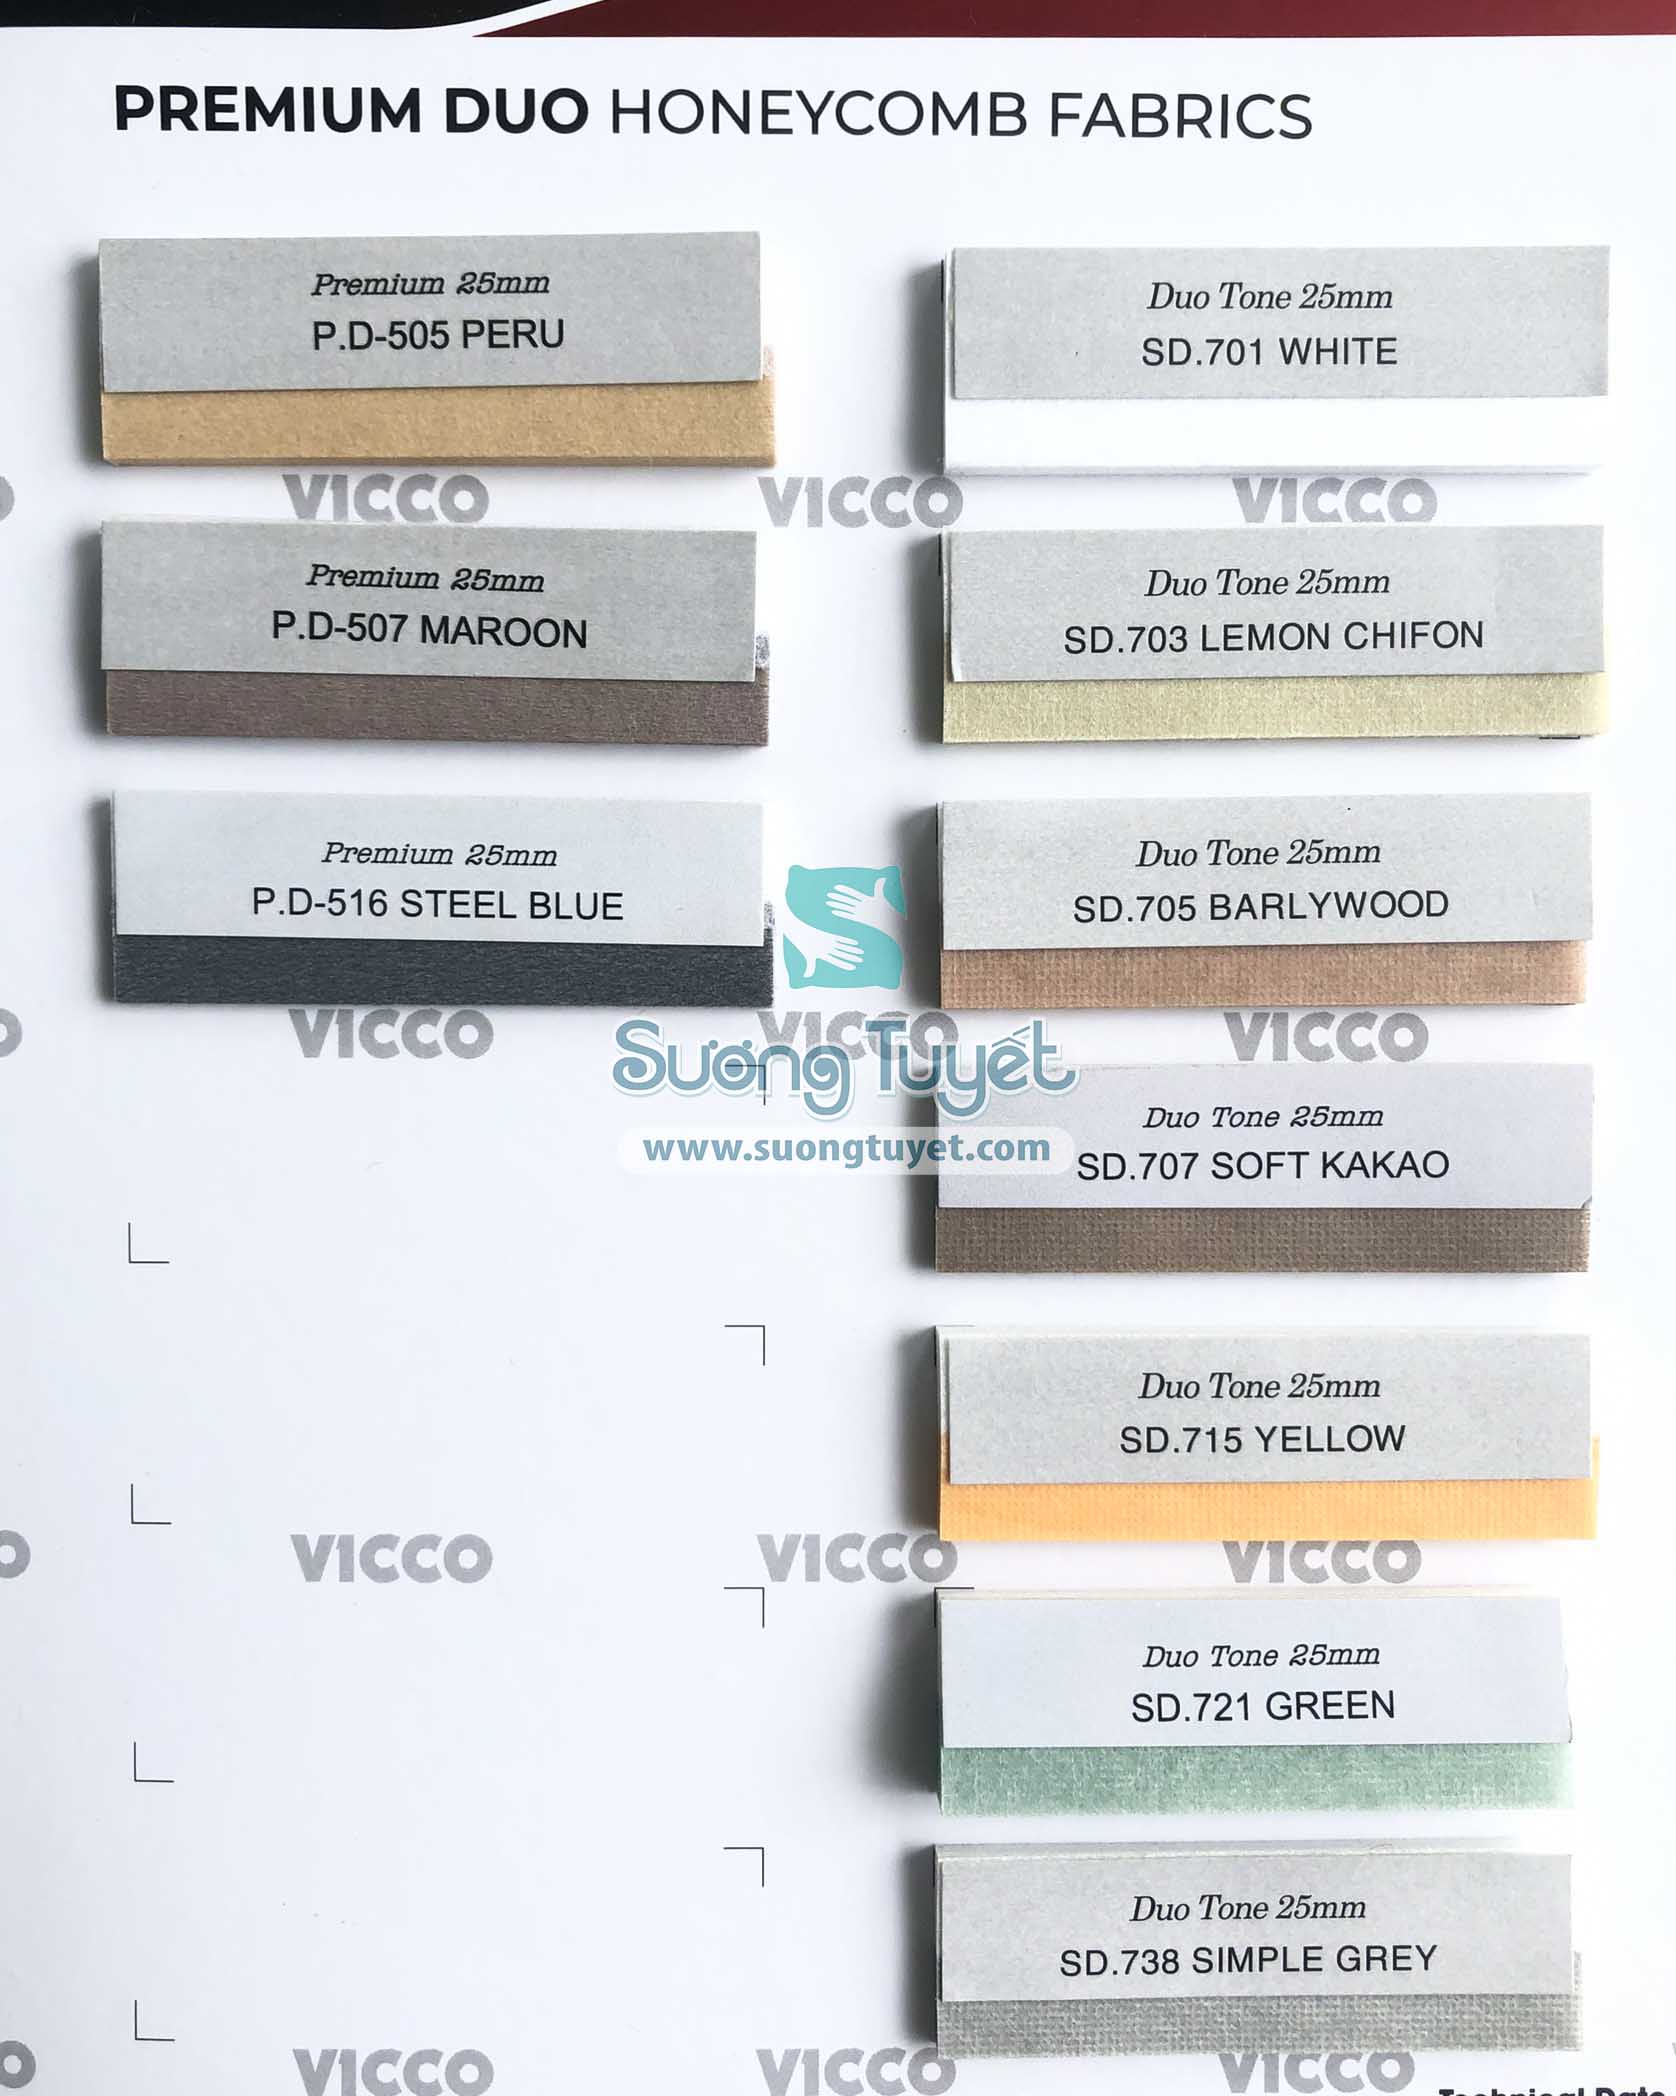  Mẫu rèm tổ ong Vicco Premium Duo